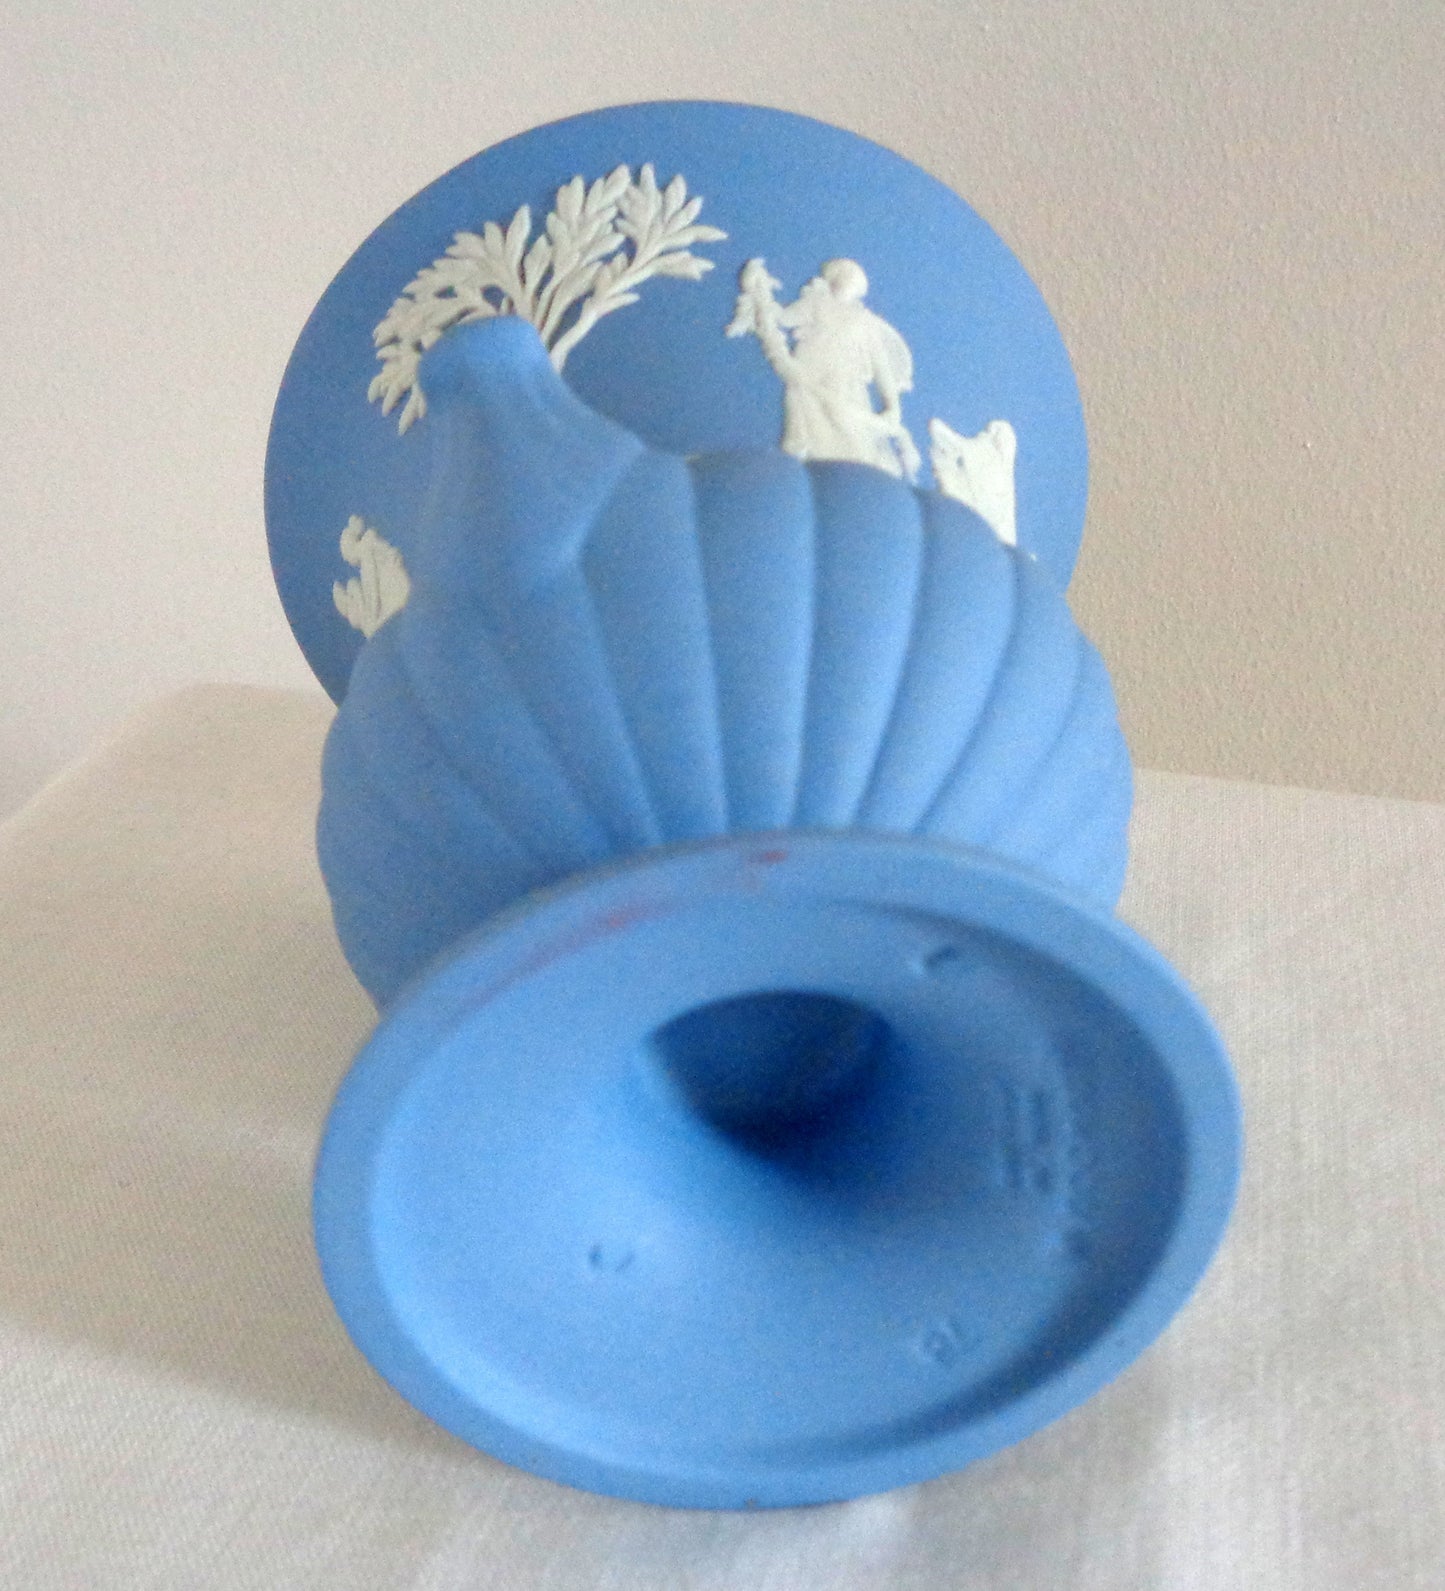 Vintage Wedgwood Blue Jasperware Campana Small Urn Vase